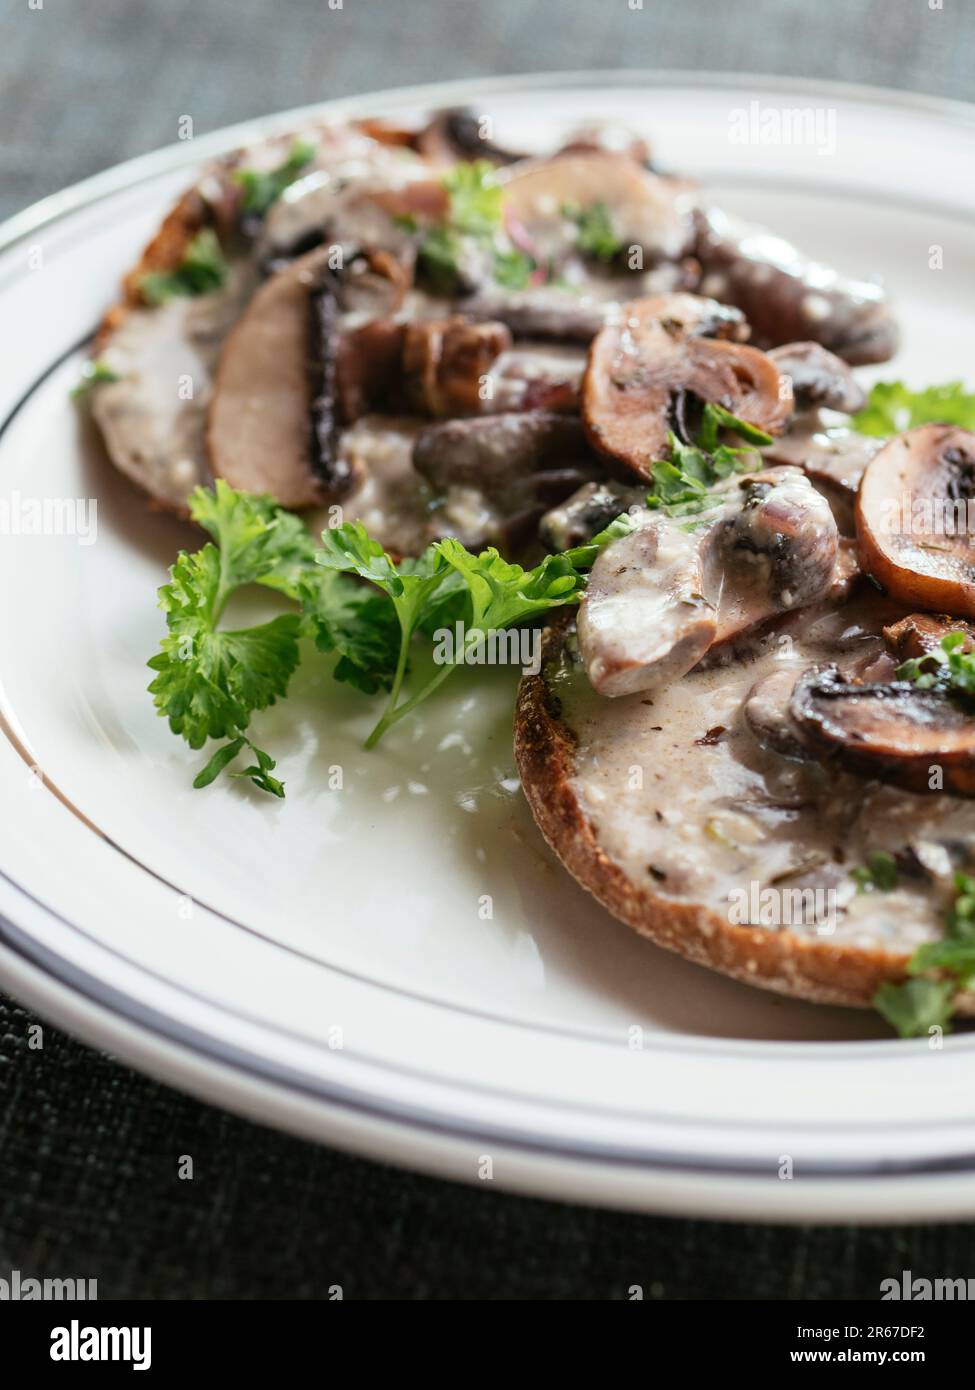 Fried mushrooms with a vegan creamy sauce on toast. Stock Photo